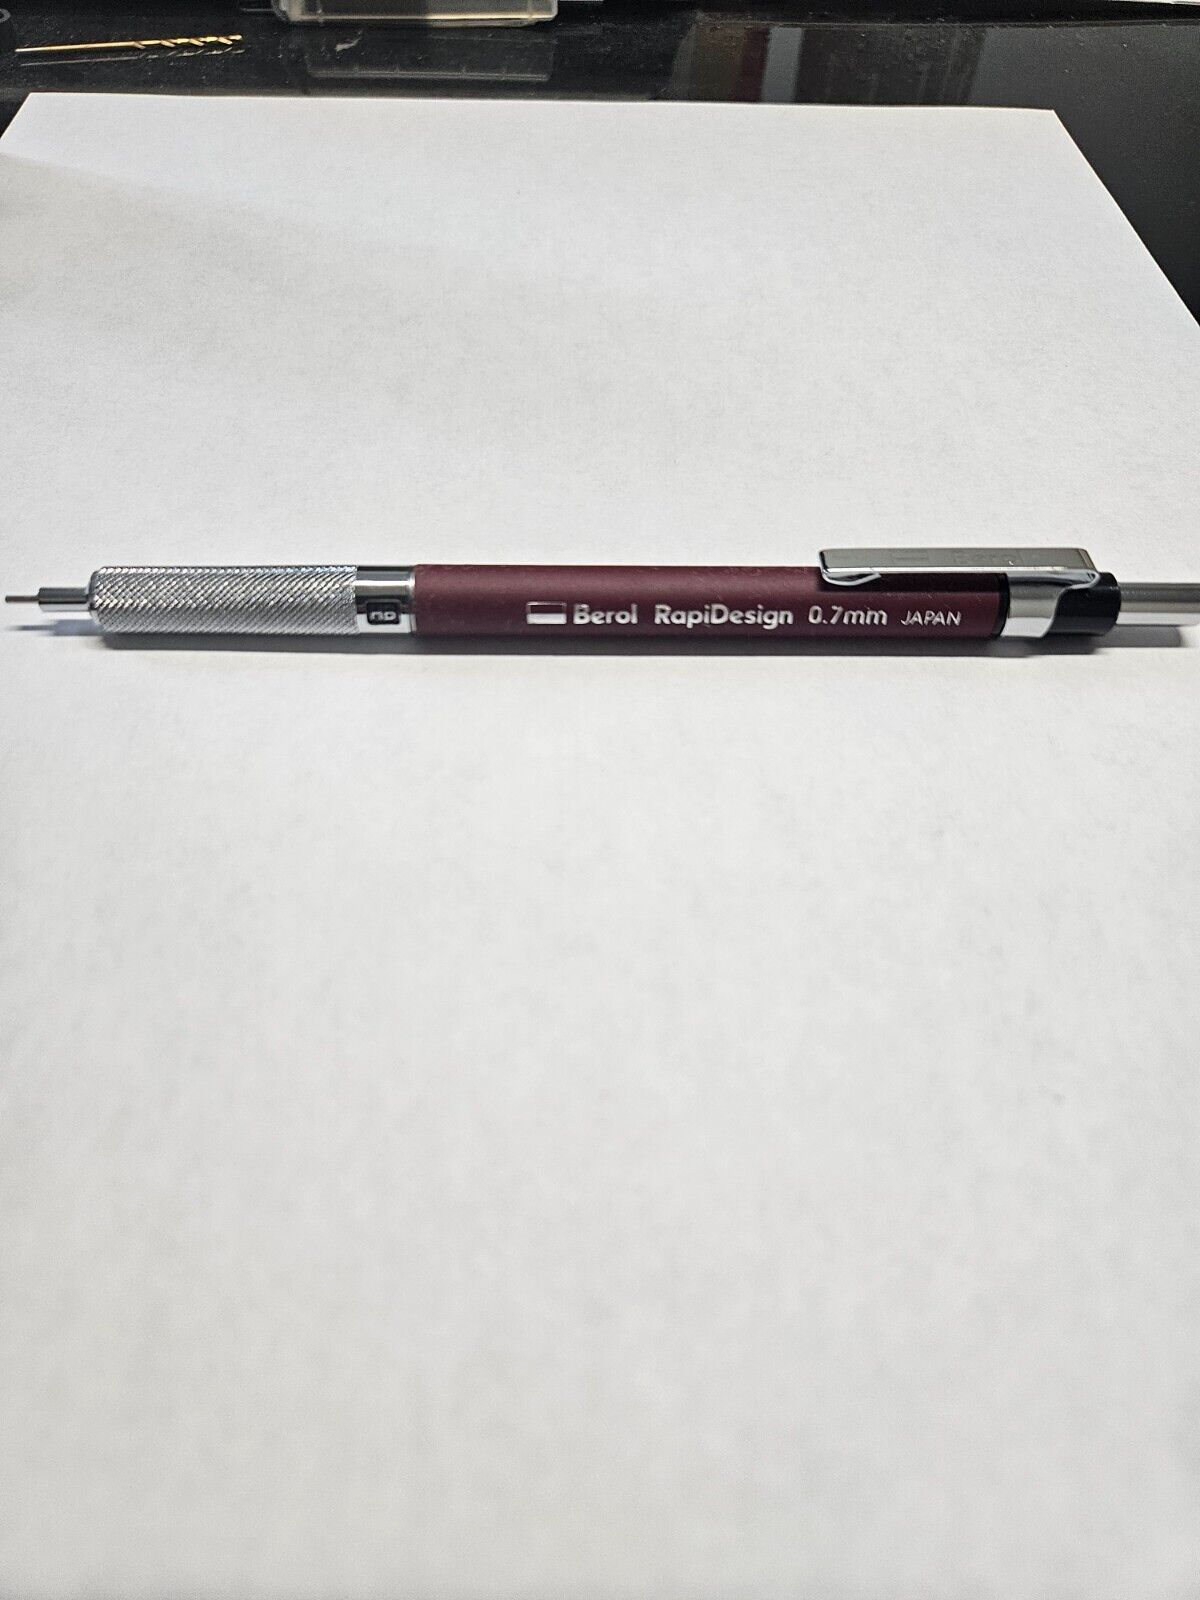 NOS berol RapiDesign Mechanical Pencil metal grip vintage .7mm